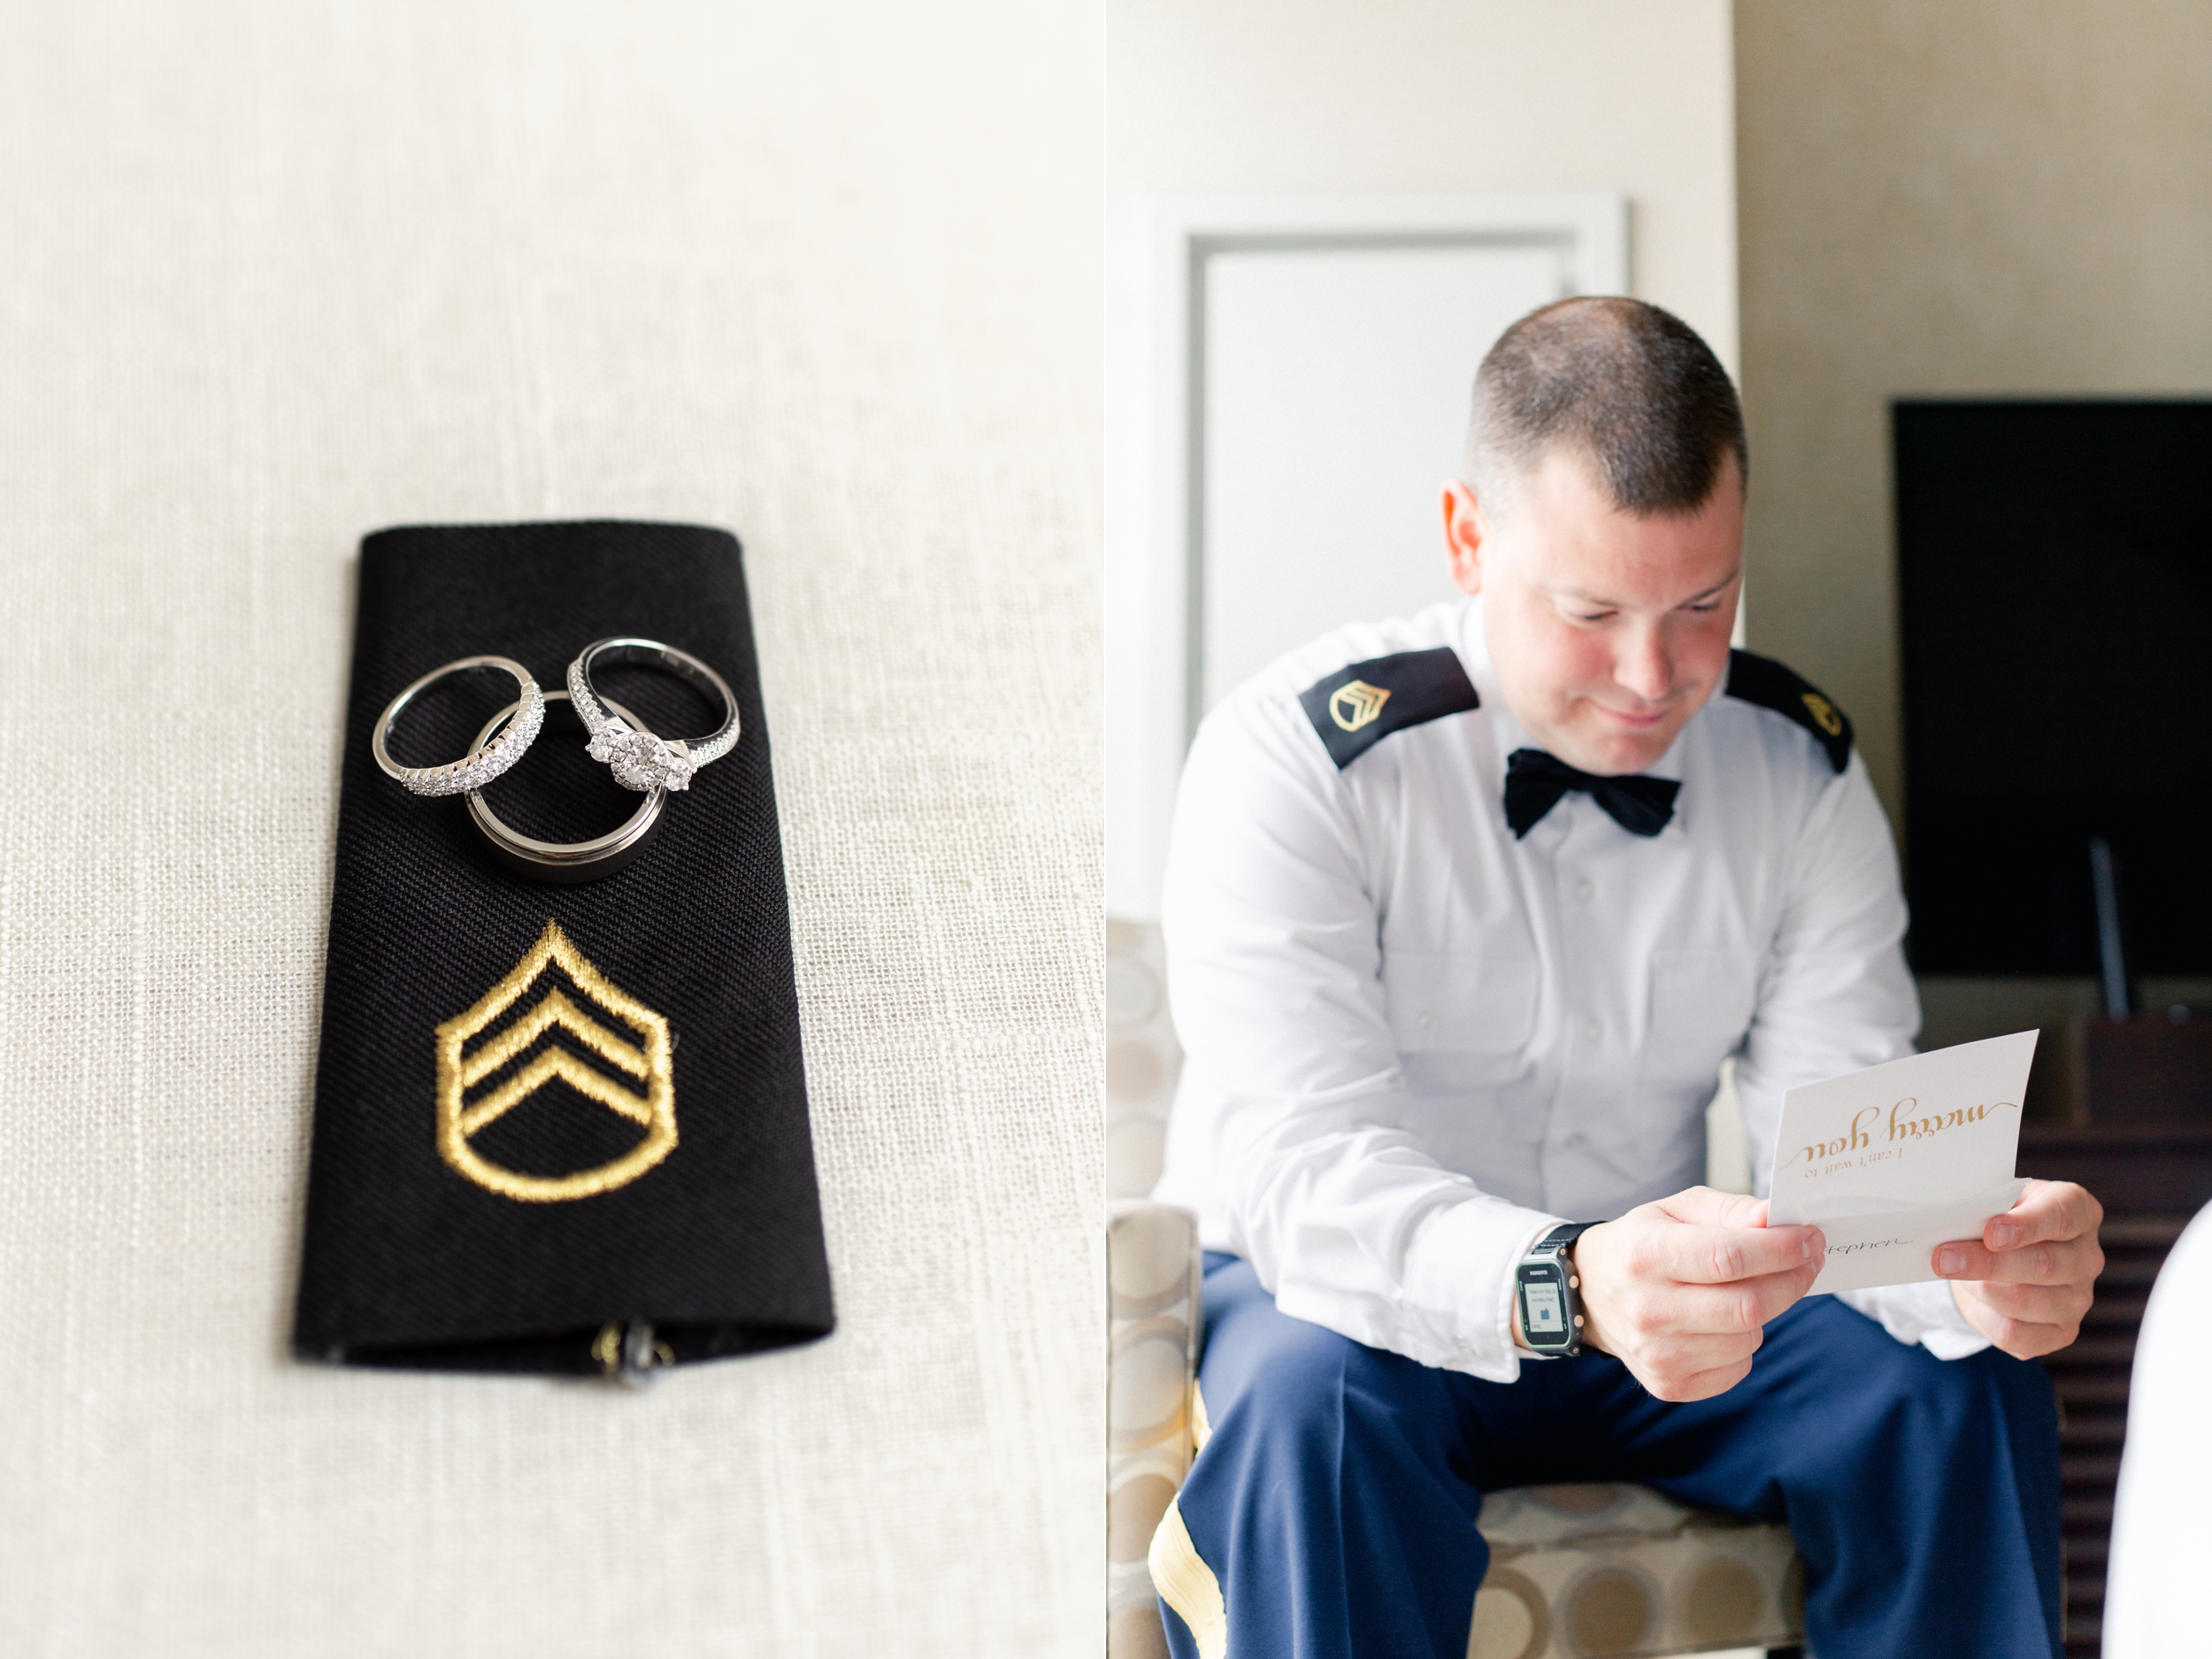 military groom getting into uniform on wedding day